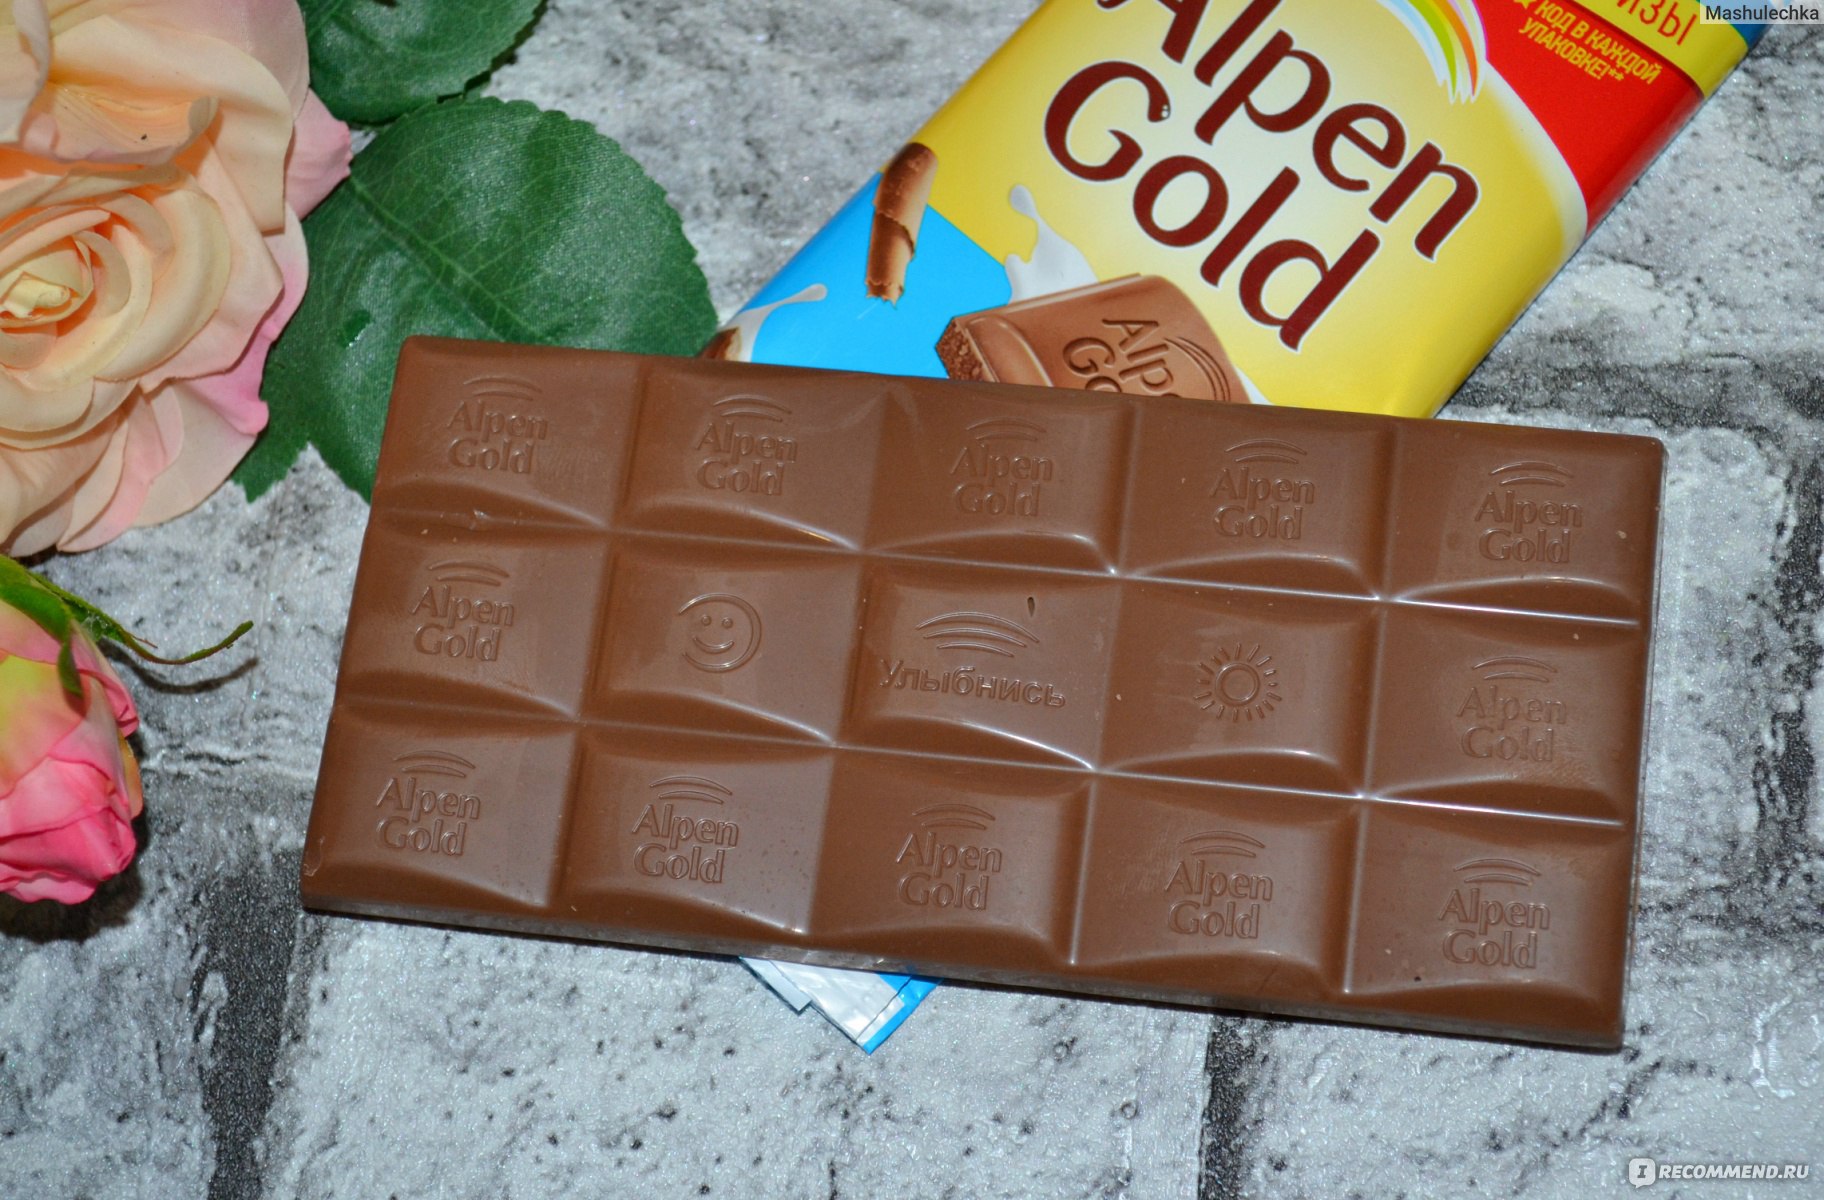 Анпенгольд шоколад. Шоколад Альпен Гольд. Шоколадка Альпен Гольд. Шоколад Милка Альпен Гольд. Альпен Гольд молочный шоколад.